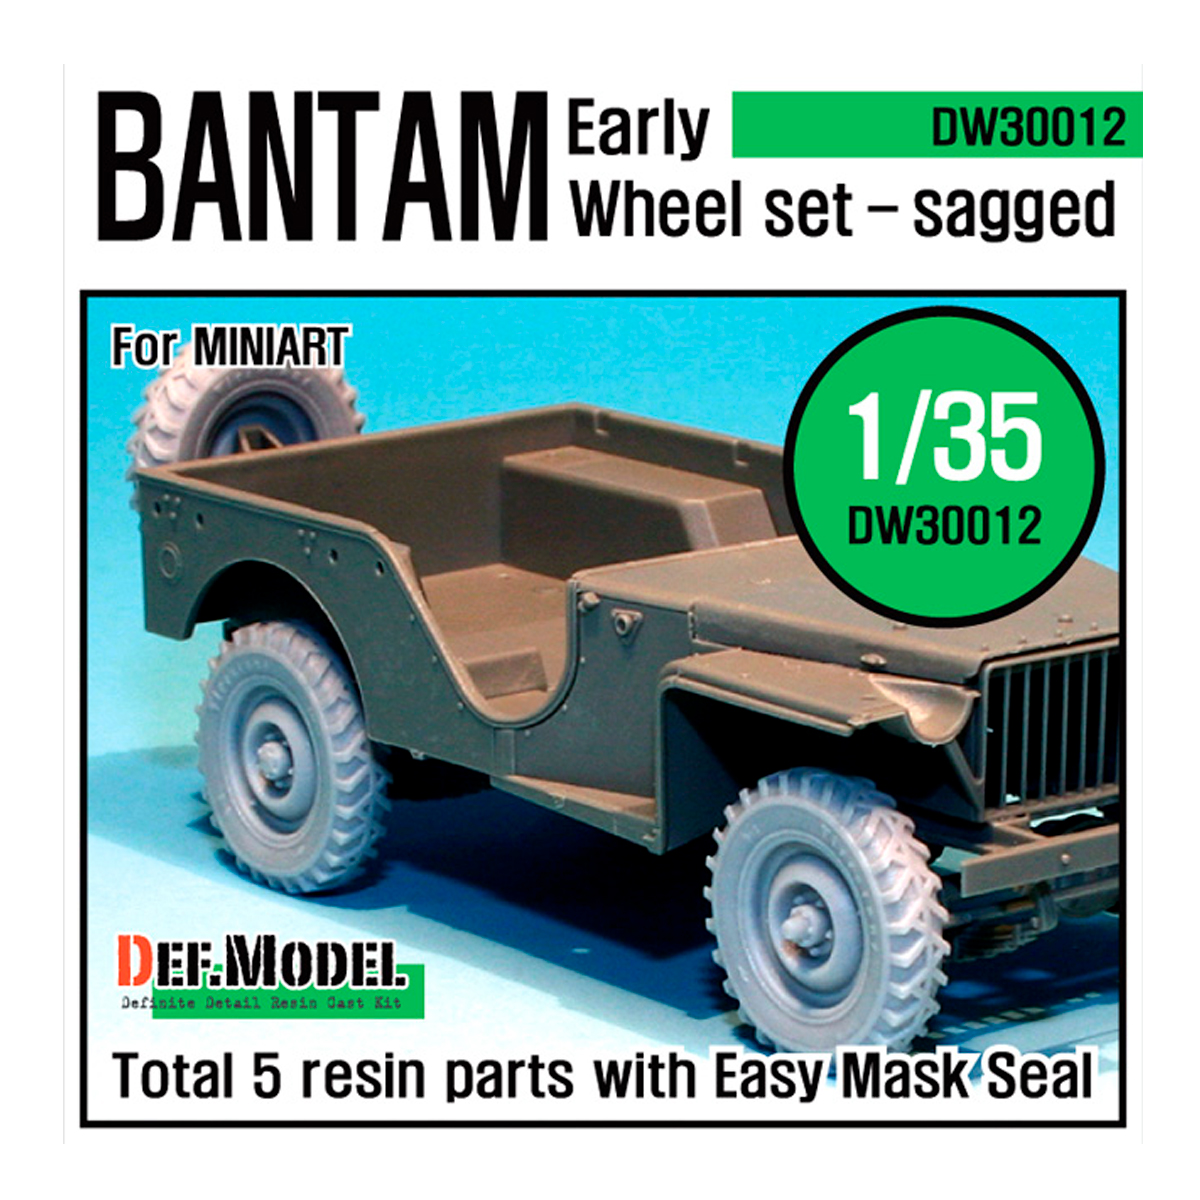 U.K. Bantam Early Wheel set (for Miniart 1/35)